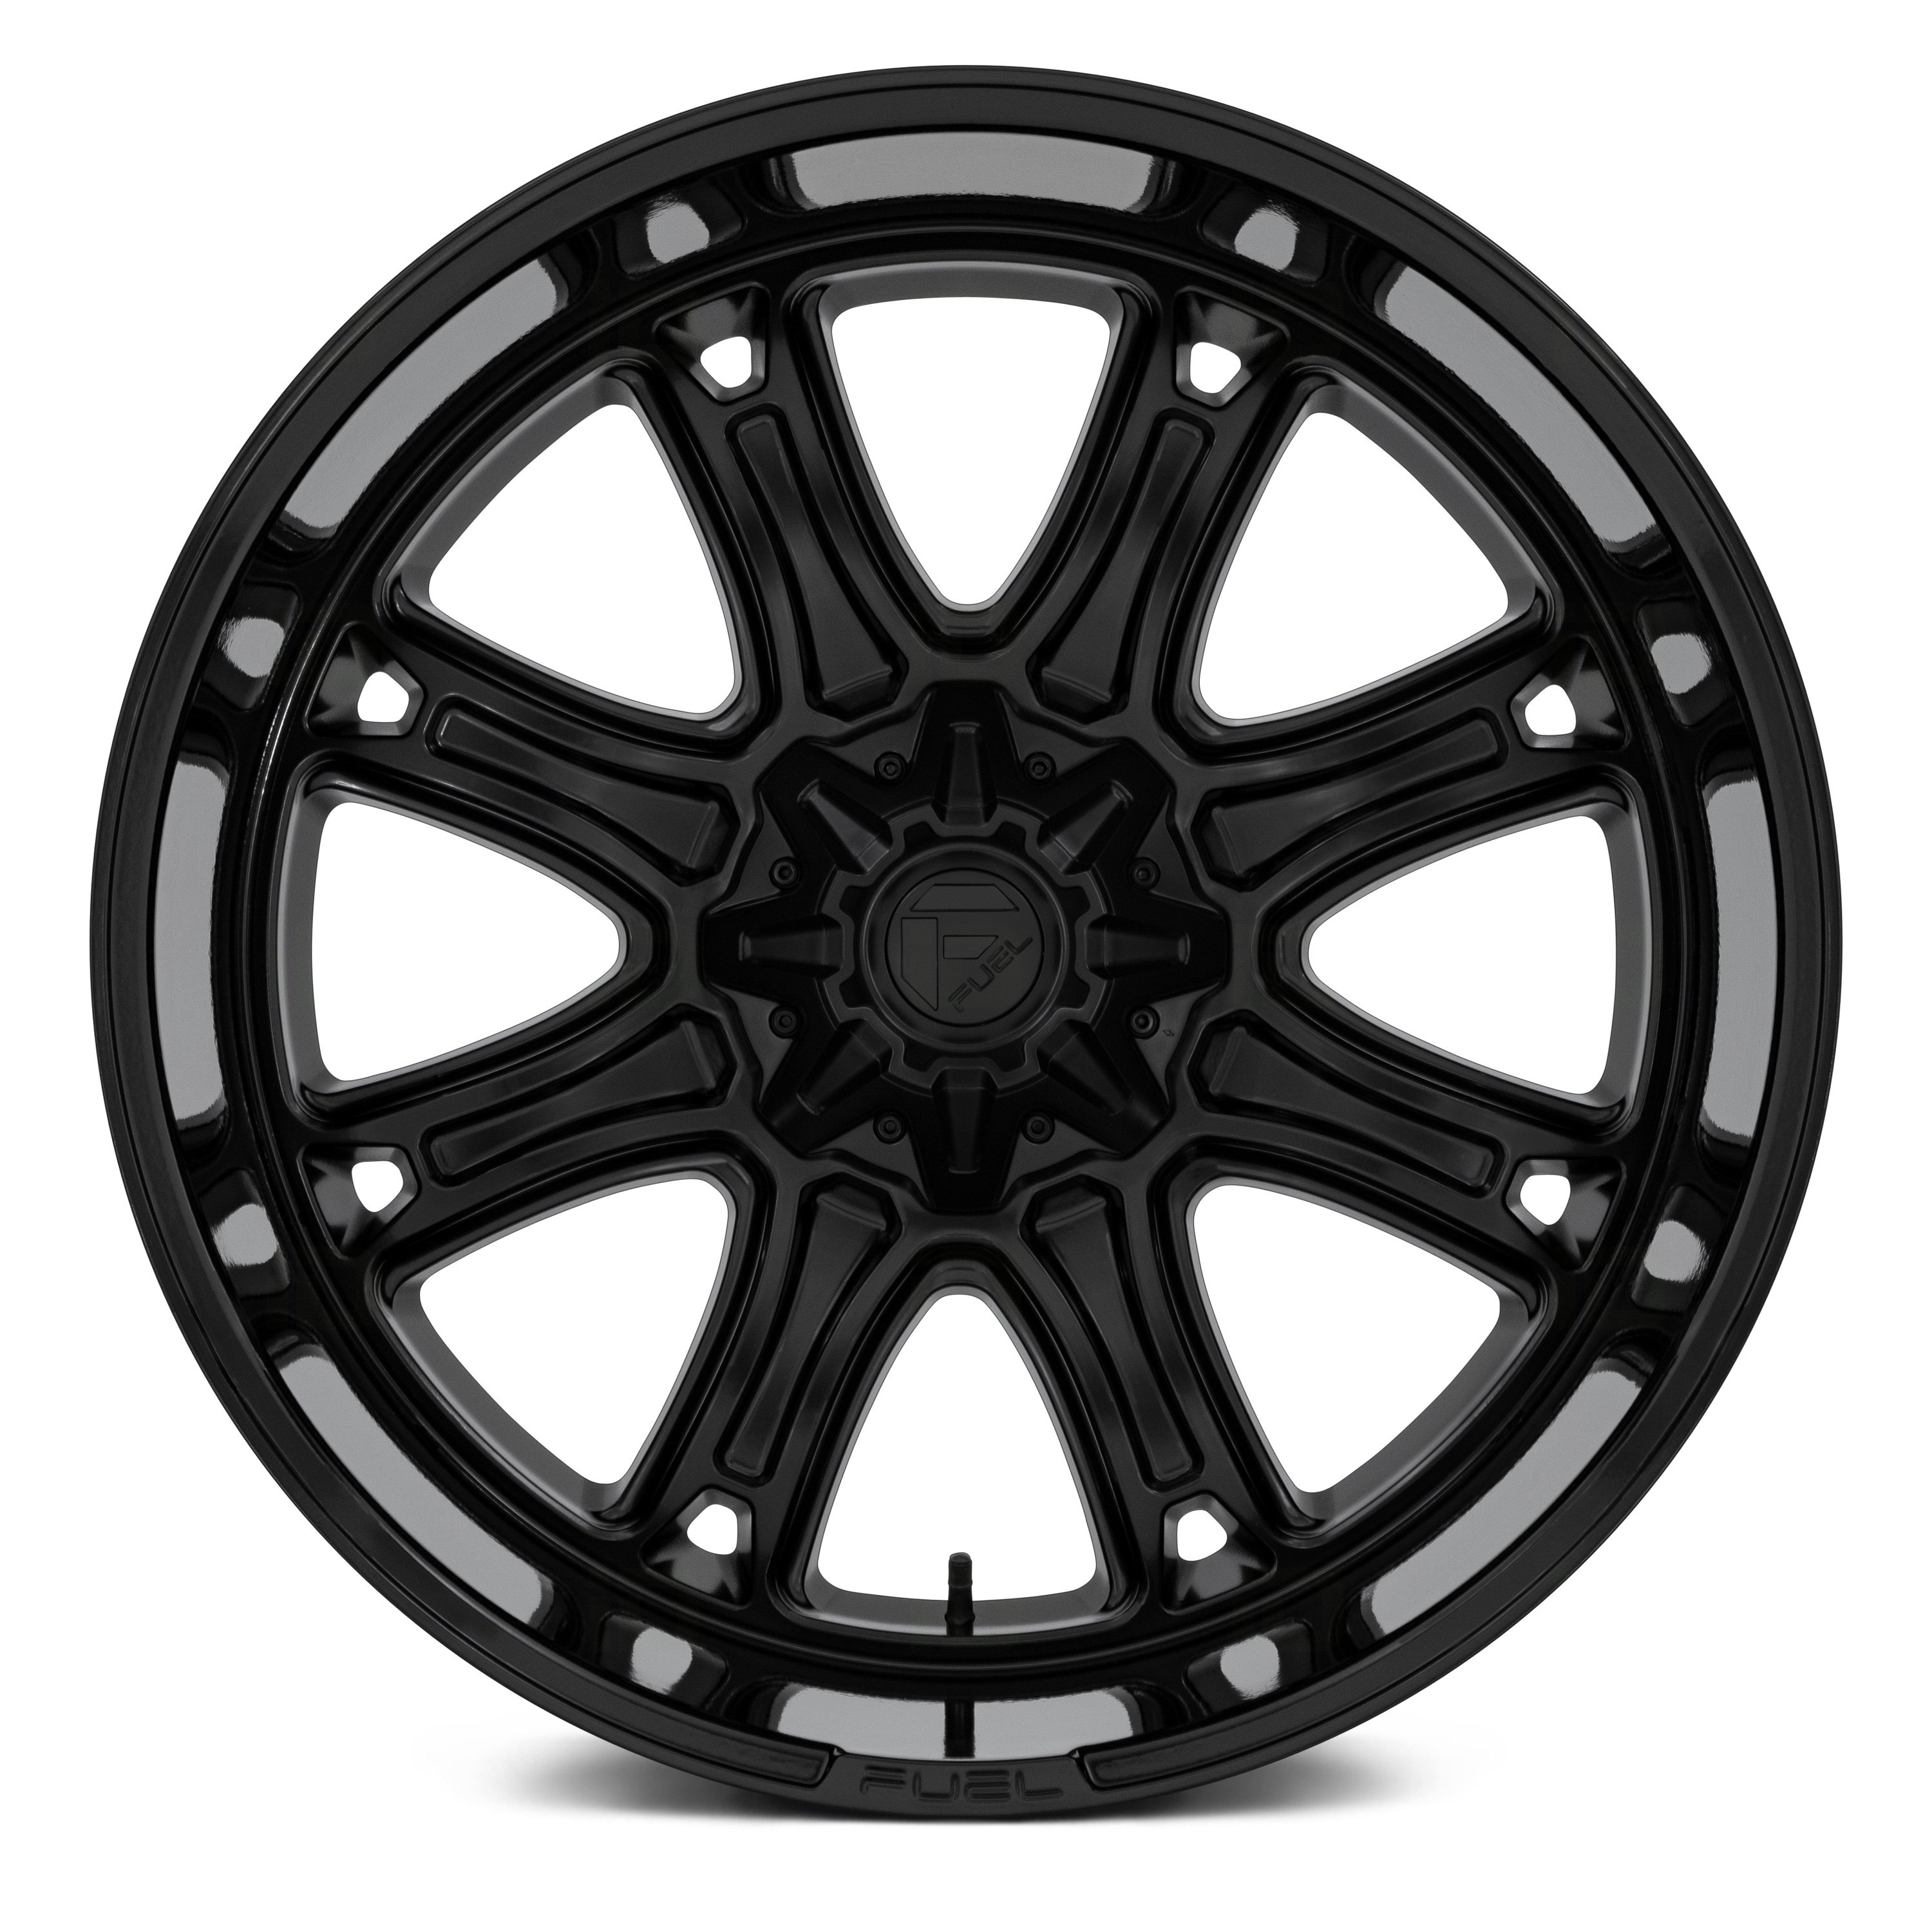 FUEL® FC853 DARKSTAR Wheels - Matte Black with Gloss Black Lip Rims